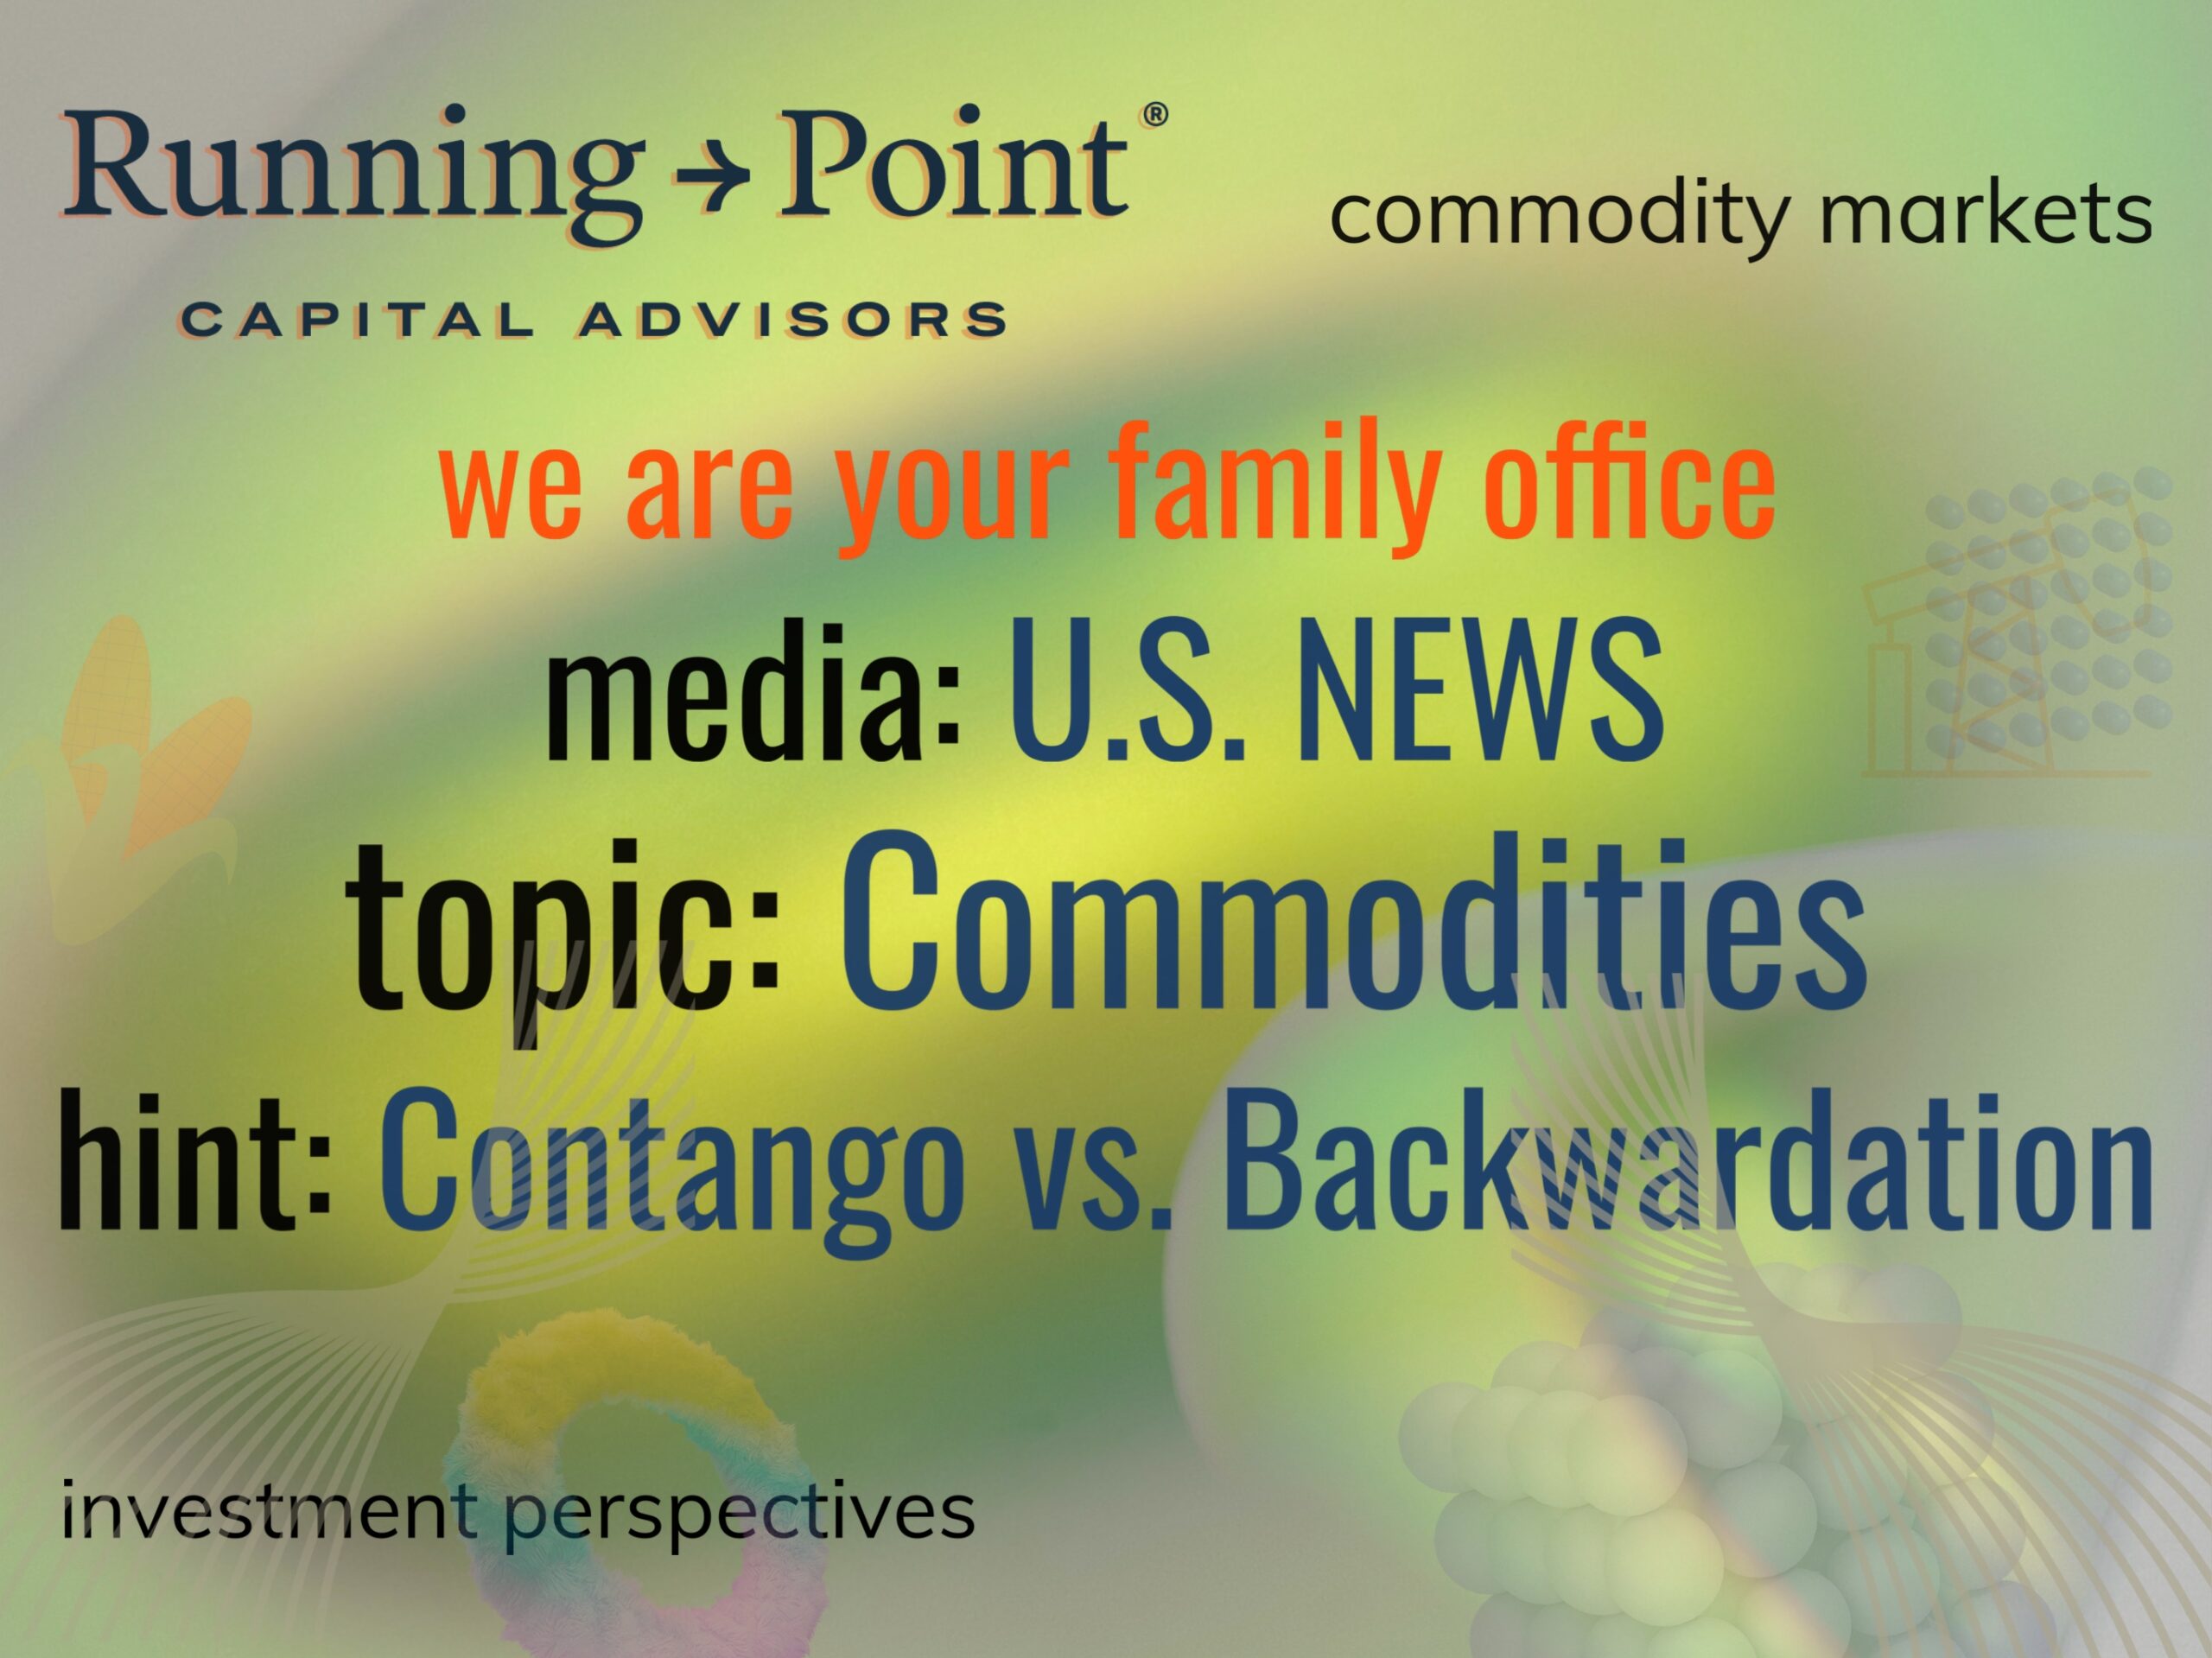 U.S. News & World Report: Commodities